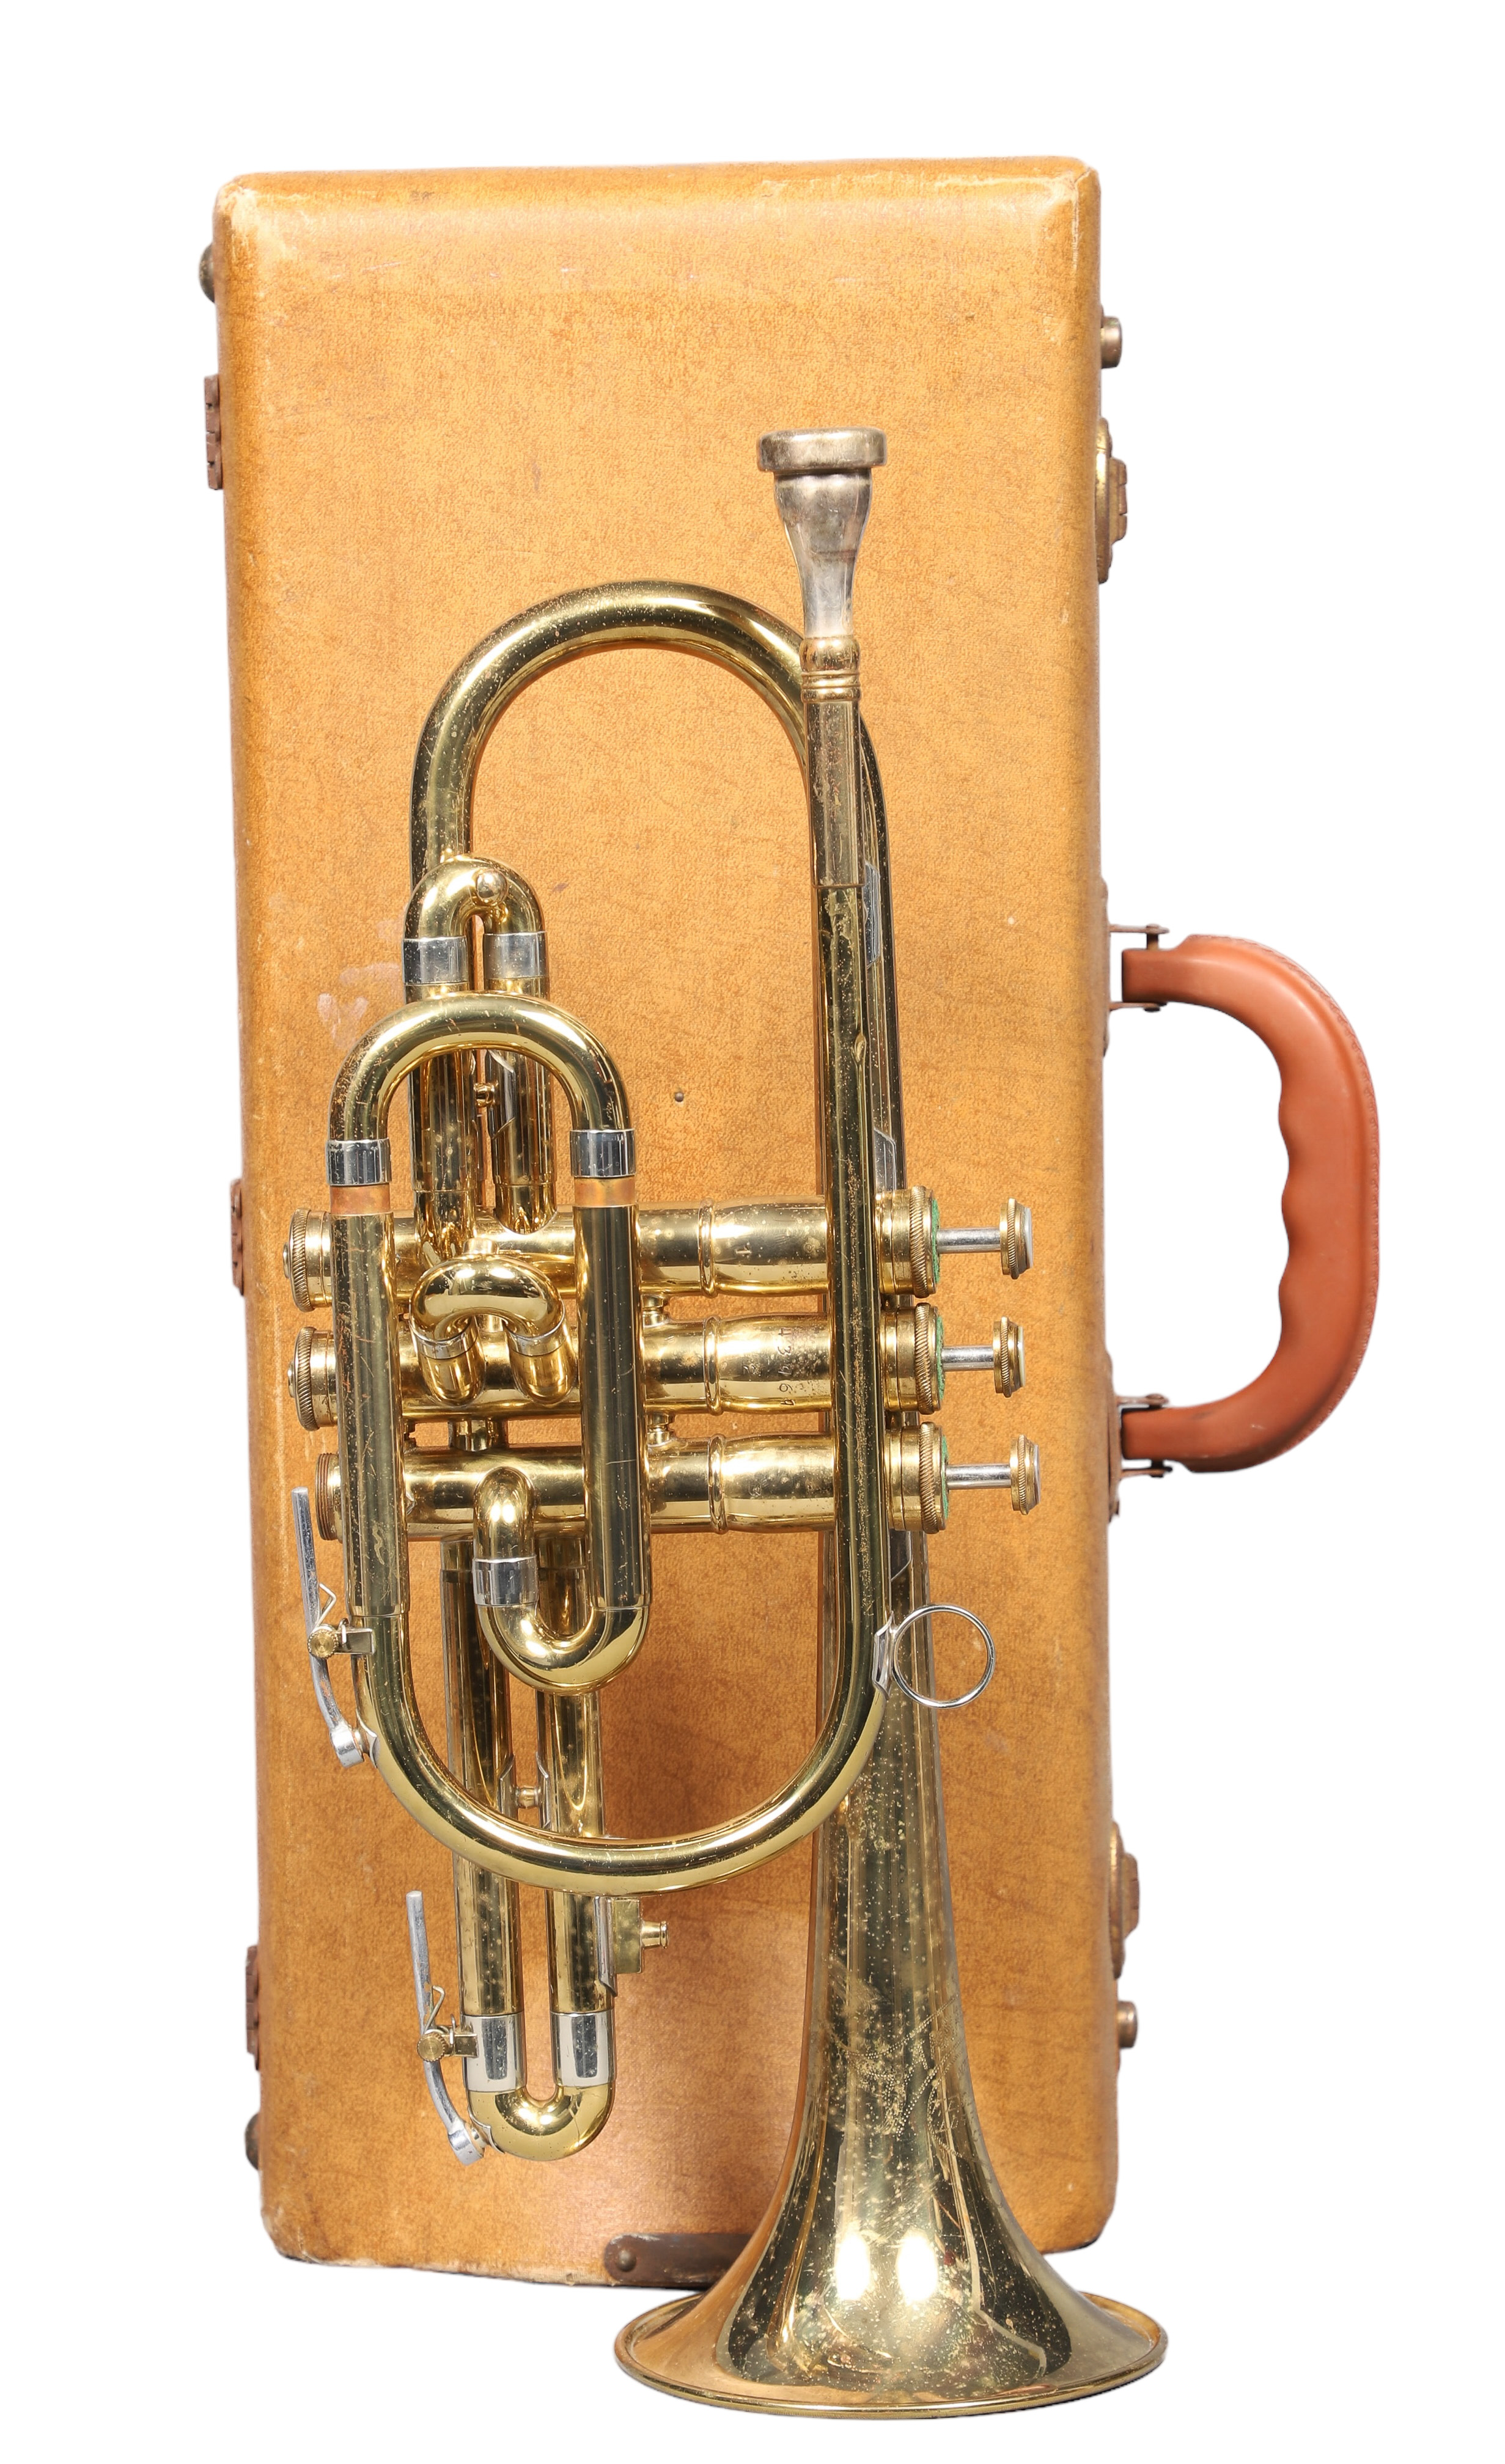 Olds Ambassador cornet trumpet, serial